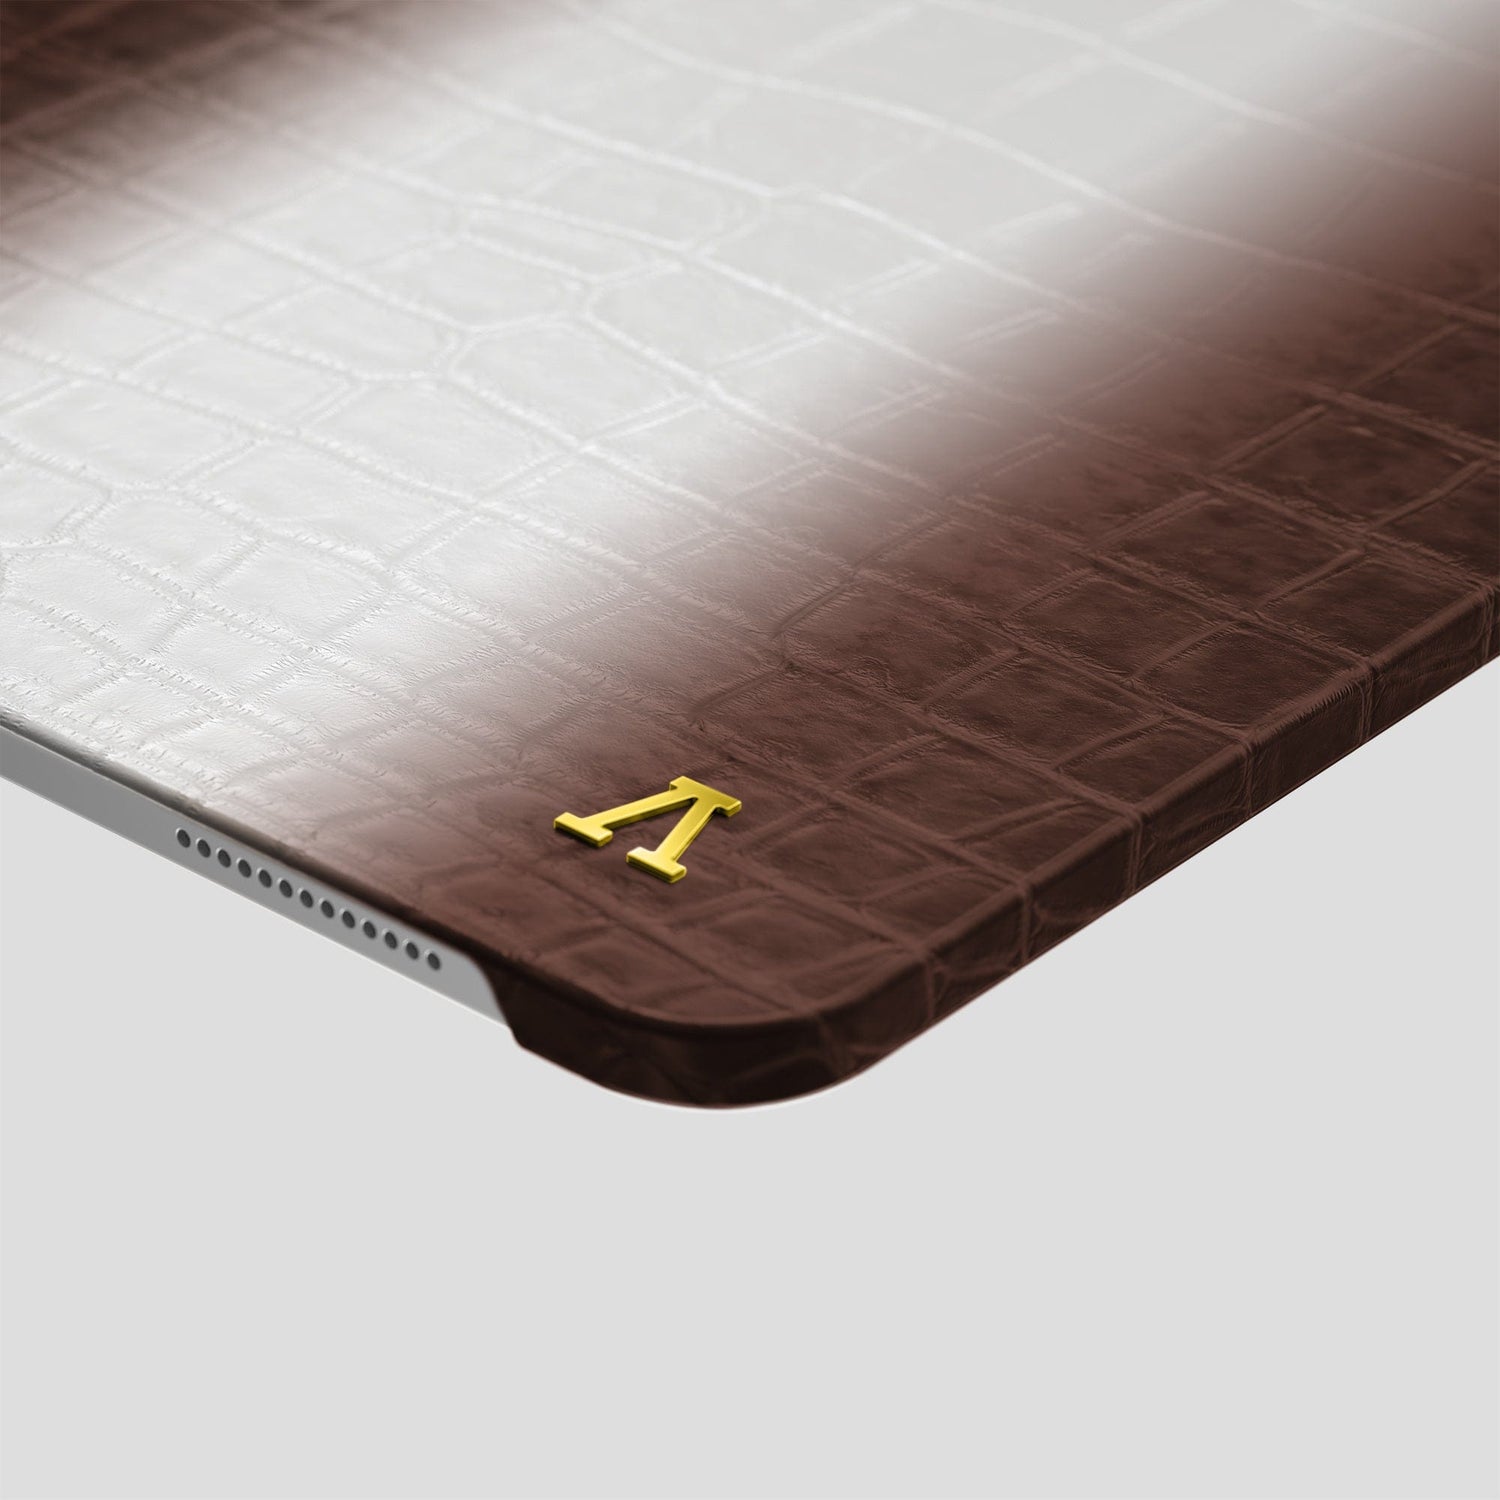 Louis Vuitton iPad Pro 12.9 Inch 2nd Generation Case 